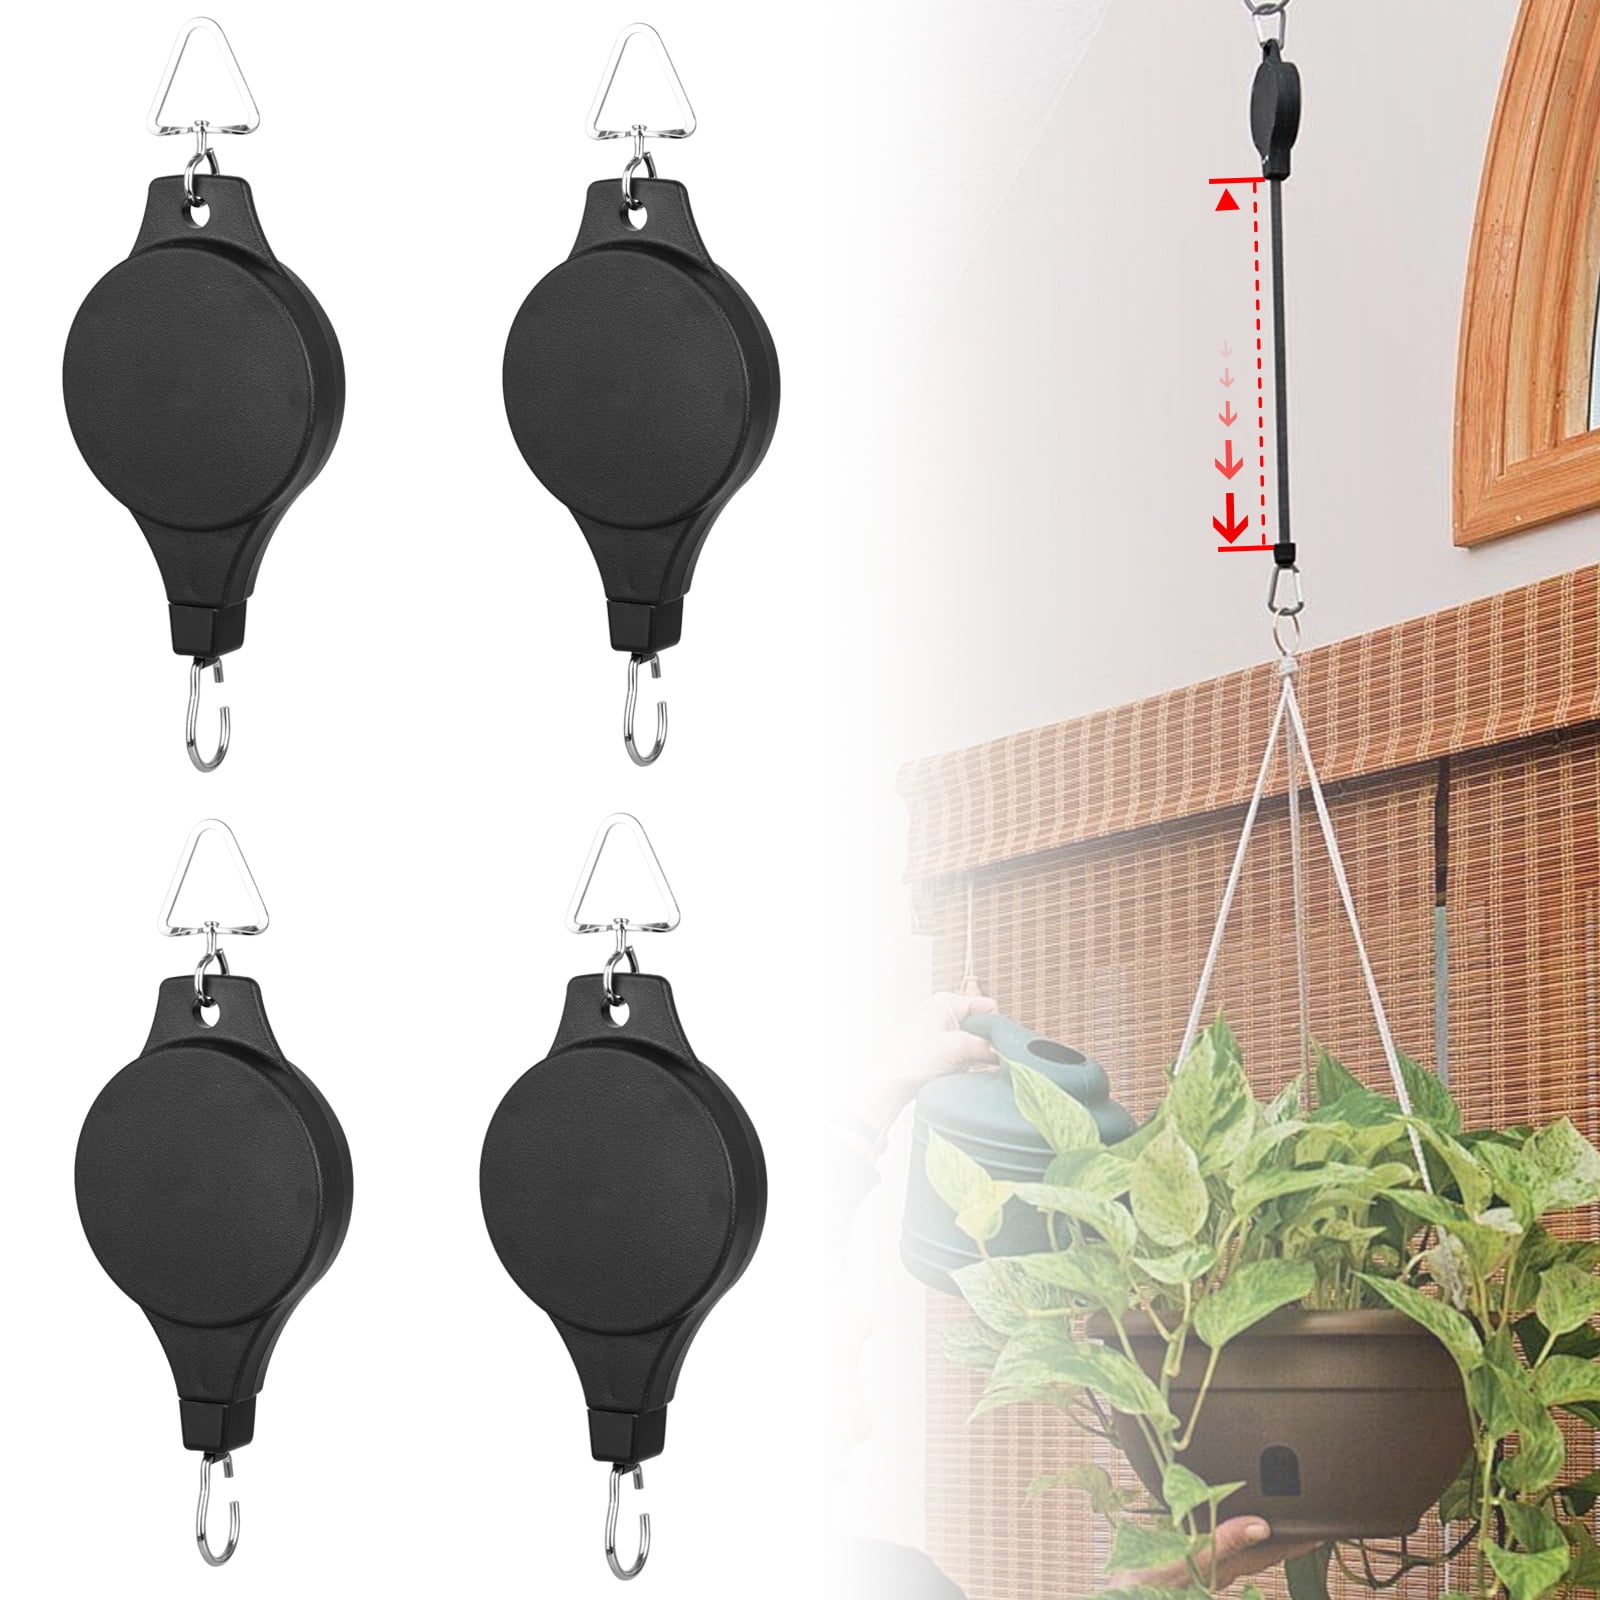 Color: Black Ochoos Retractable Hook Easy Reach Pull Down Hanger Pulley Plant Flowerpot Hanging Hook Garden Tool 